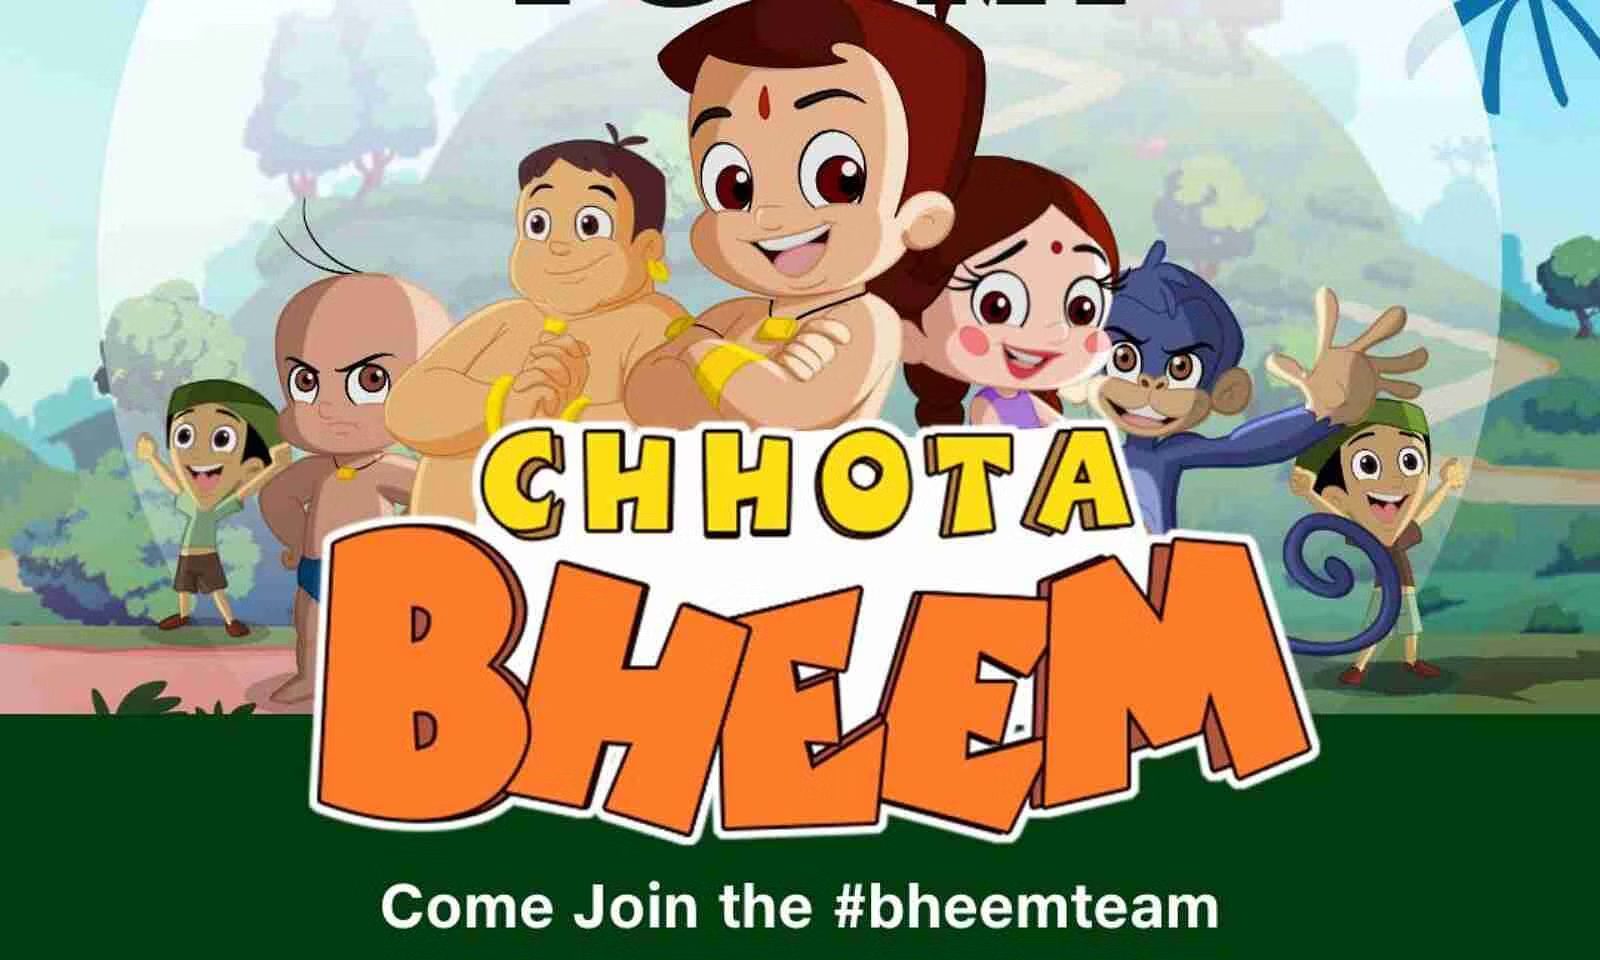 Download Chhota Bheem Games Full Version